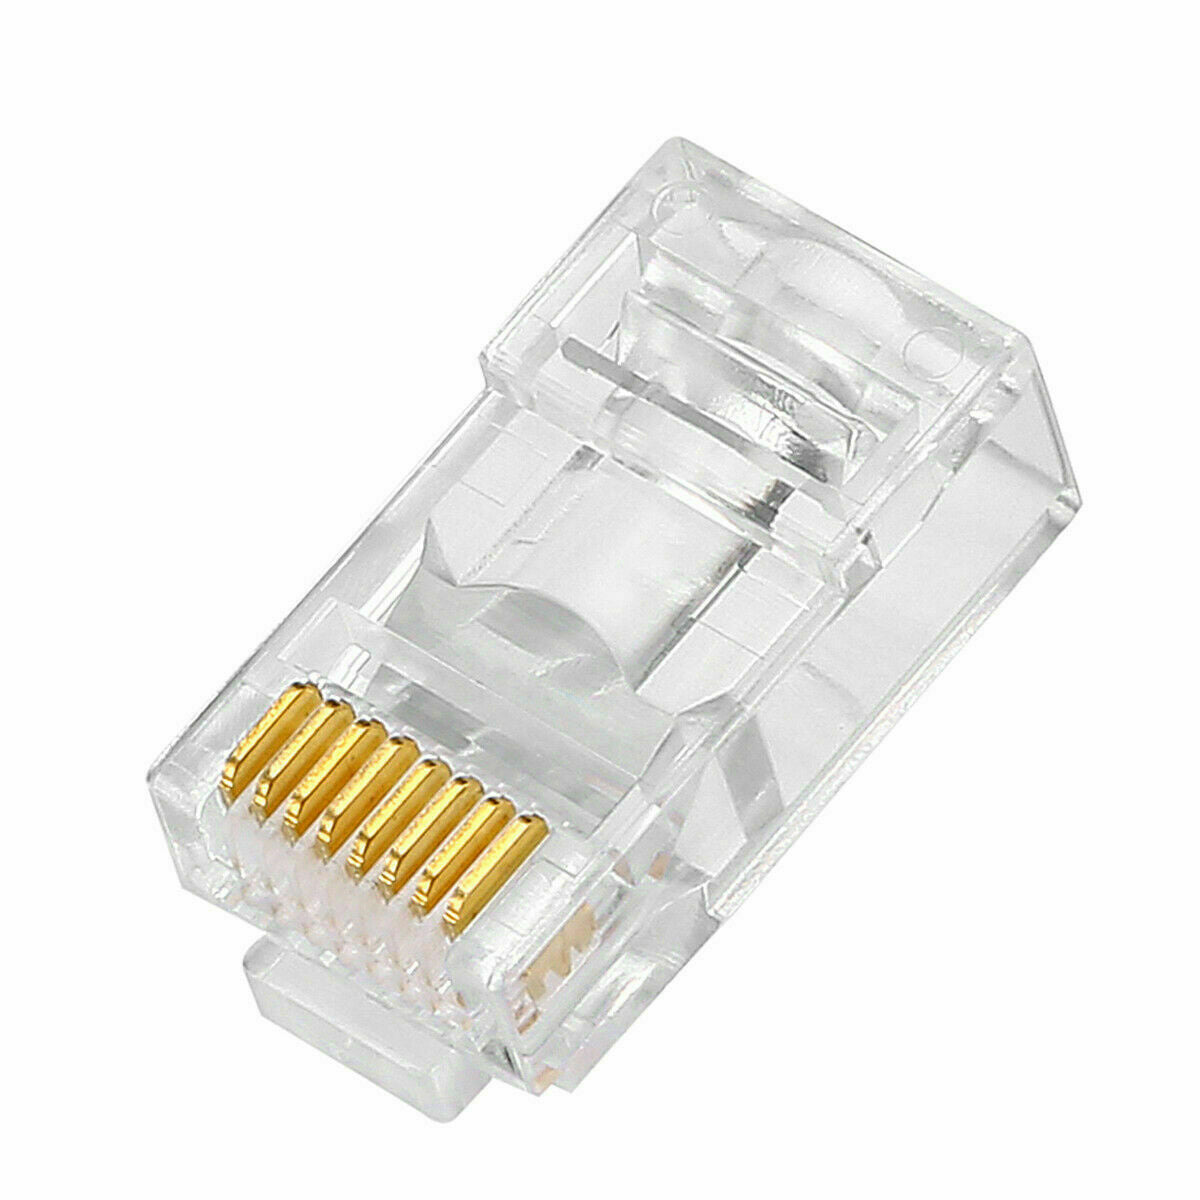 100 Pcs CAT6 RJ45 Pass Through Network Cable Modular Plug Connector Open End